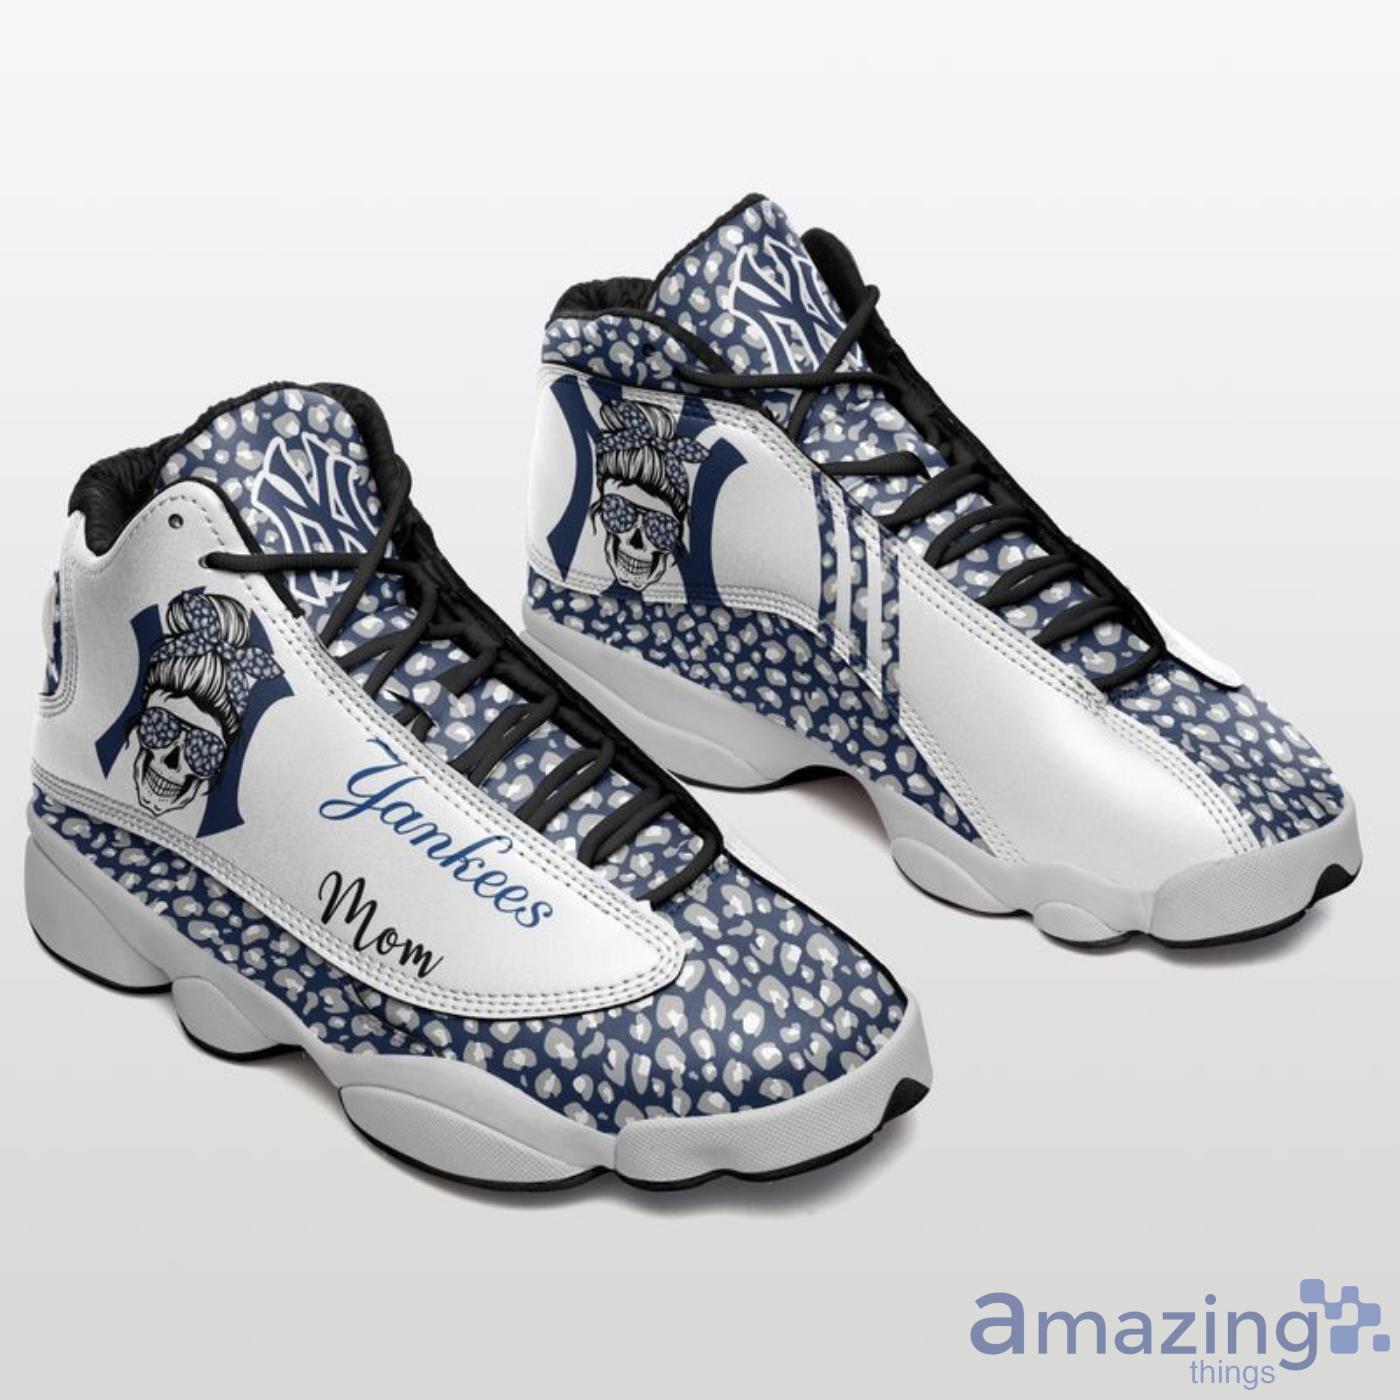 Toronto Blue Jays Camo Pattern Air Jordan 13 Shoes For Fans